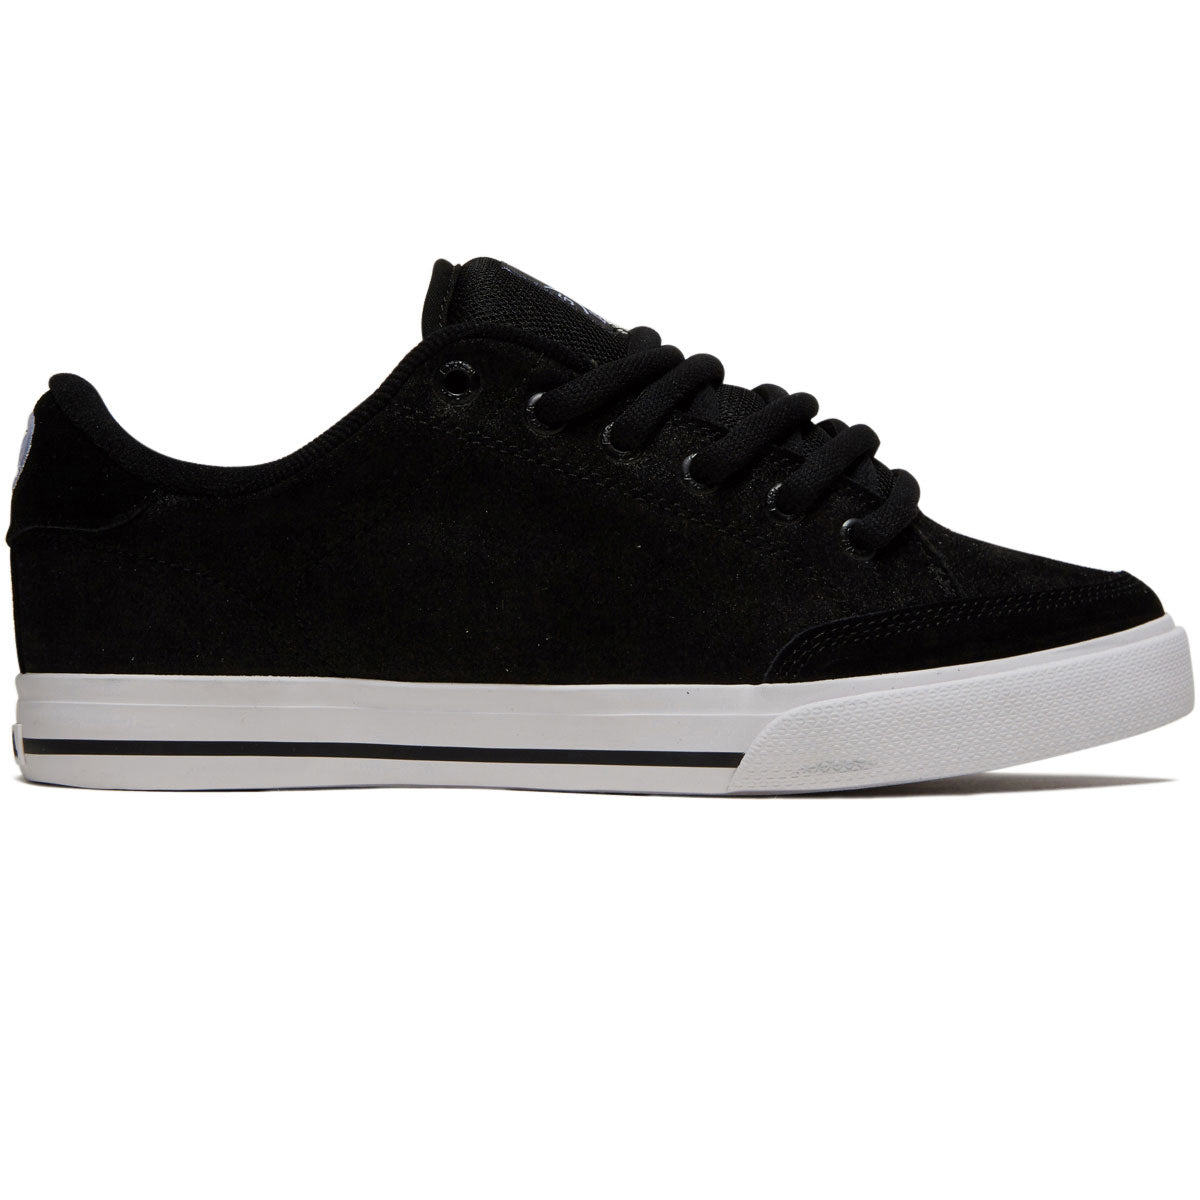 C1rca Al 50 Shoes - Worn Black/White image 1